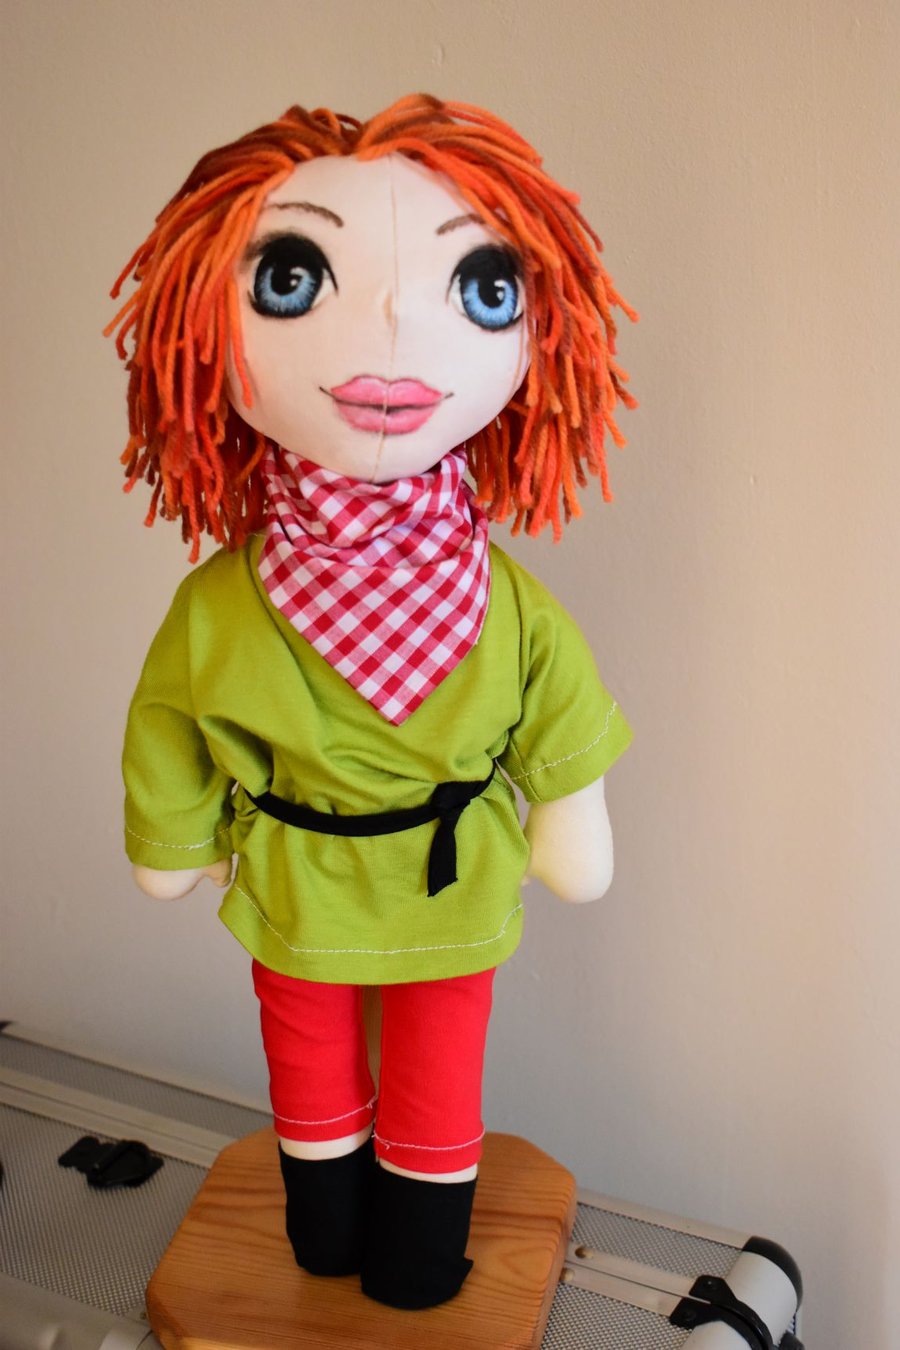 Red headed handmade doll